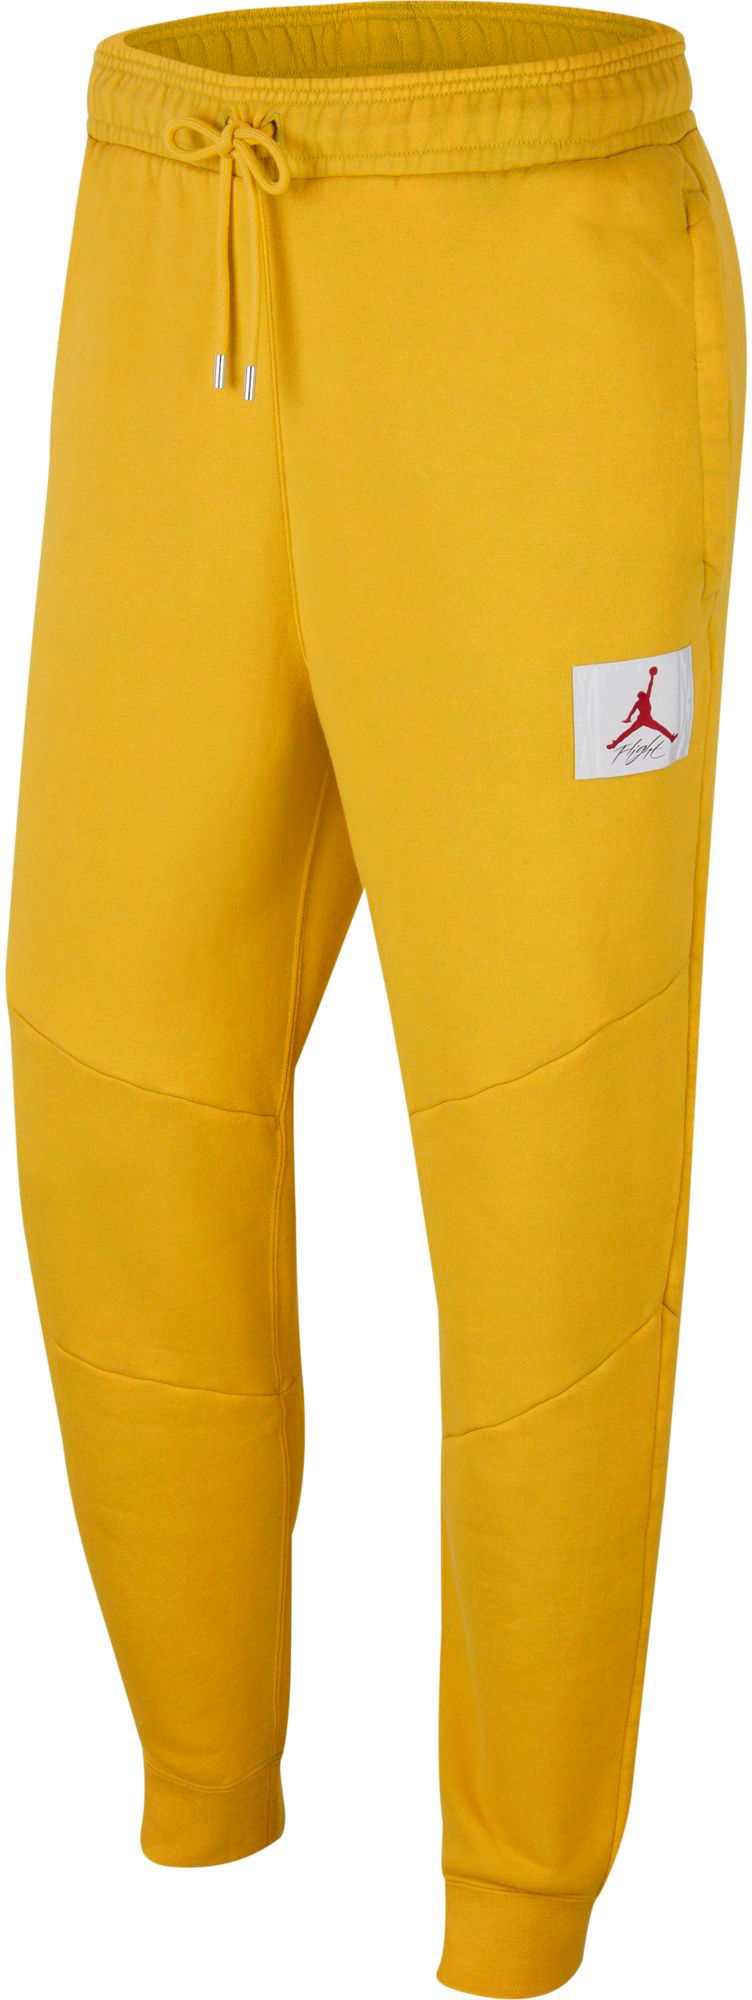 Jordan Pants for Training \u0026 Basketball 